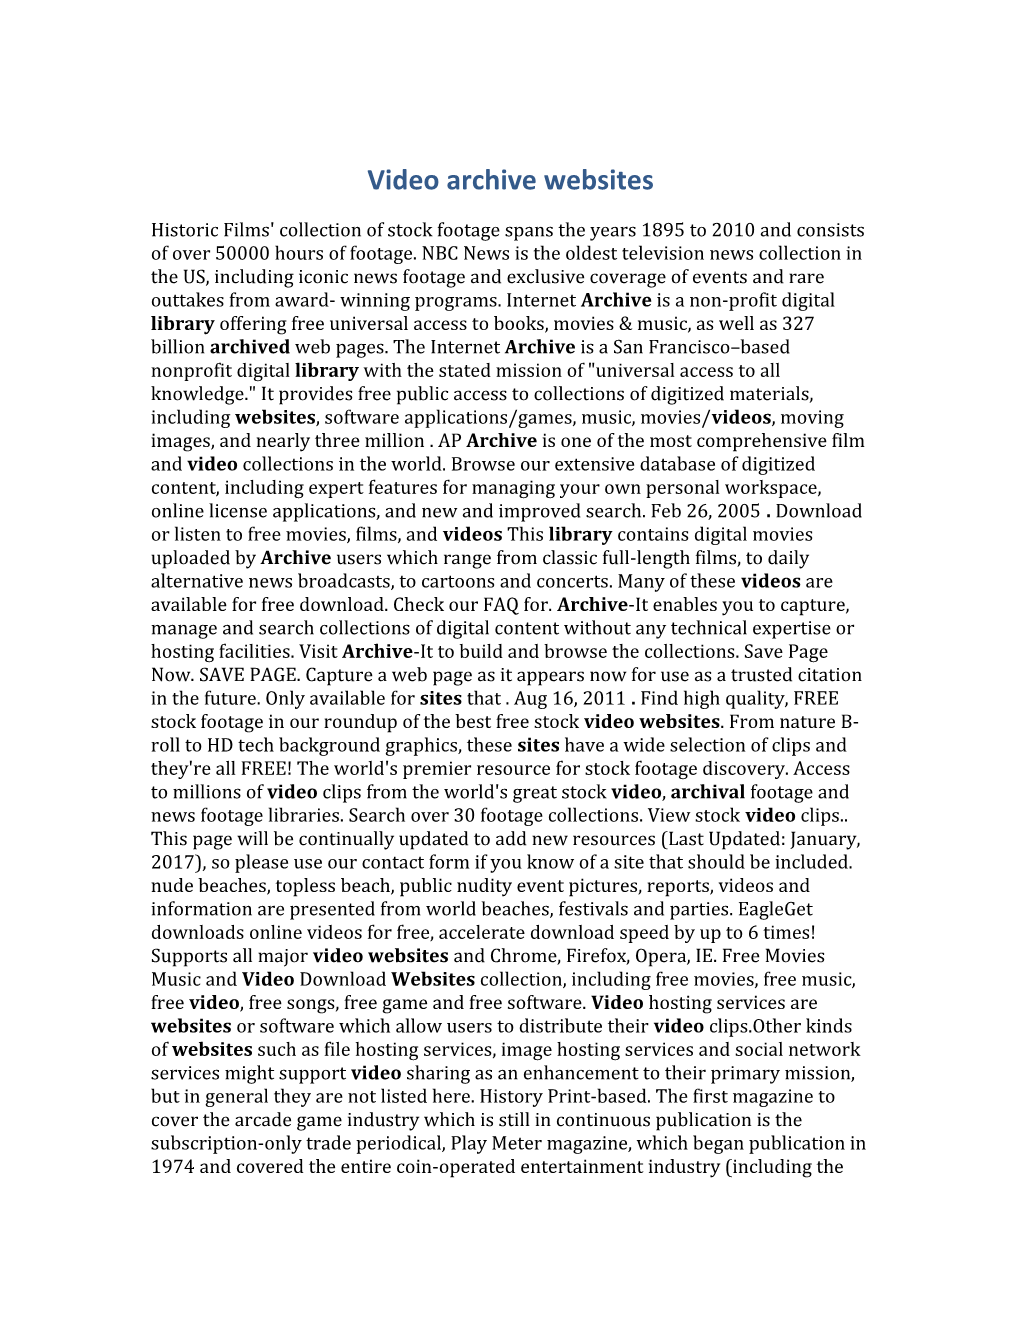 Video Archive Websites